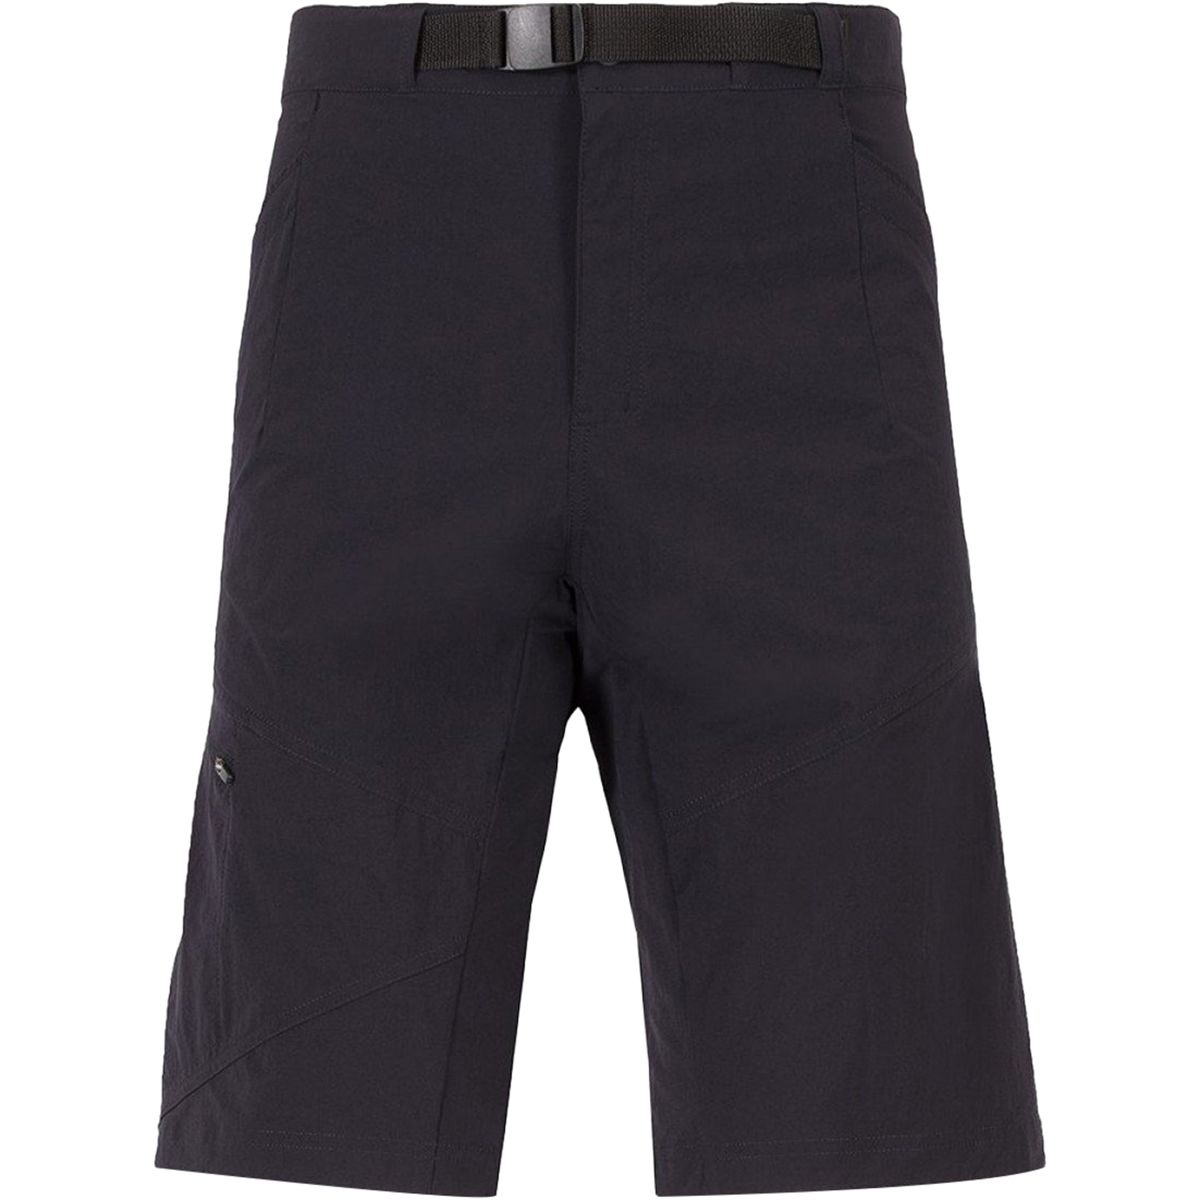 La Sportiva Granito Short - Men's - Clothing